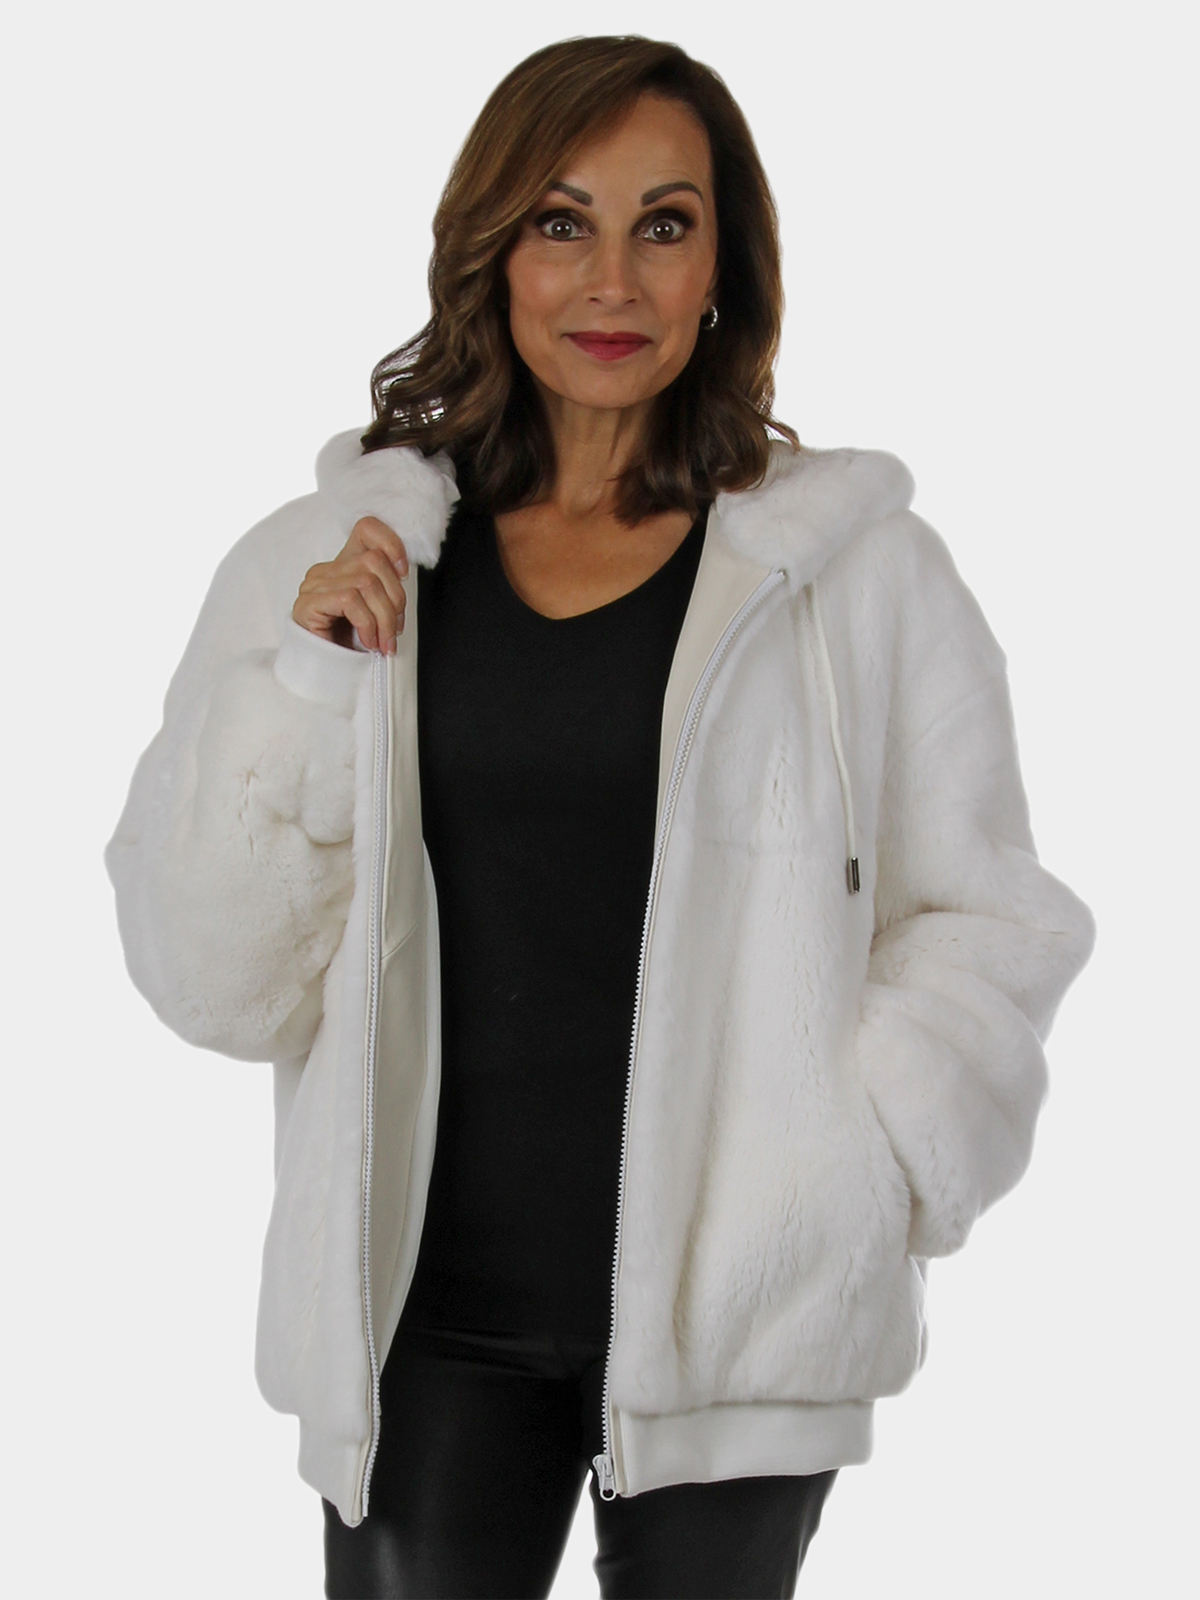 Day Furs Inc. Woman's Plus Size Black and White Rex Rabbit Fur Jacket